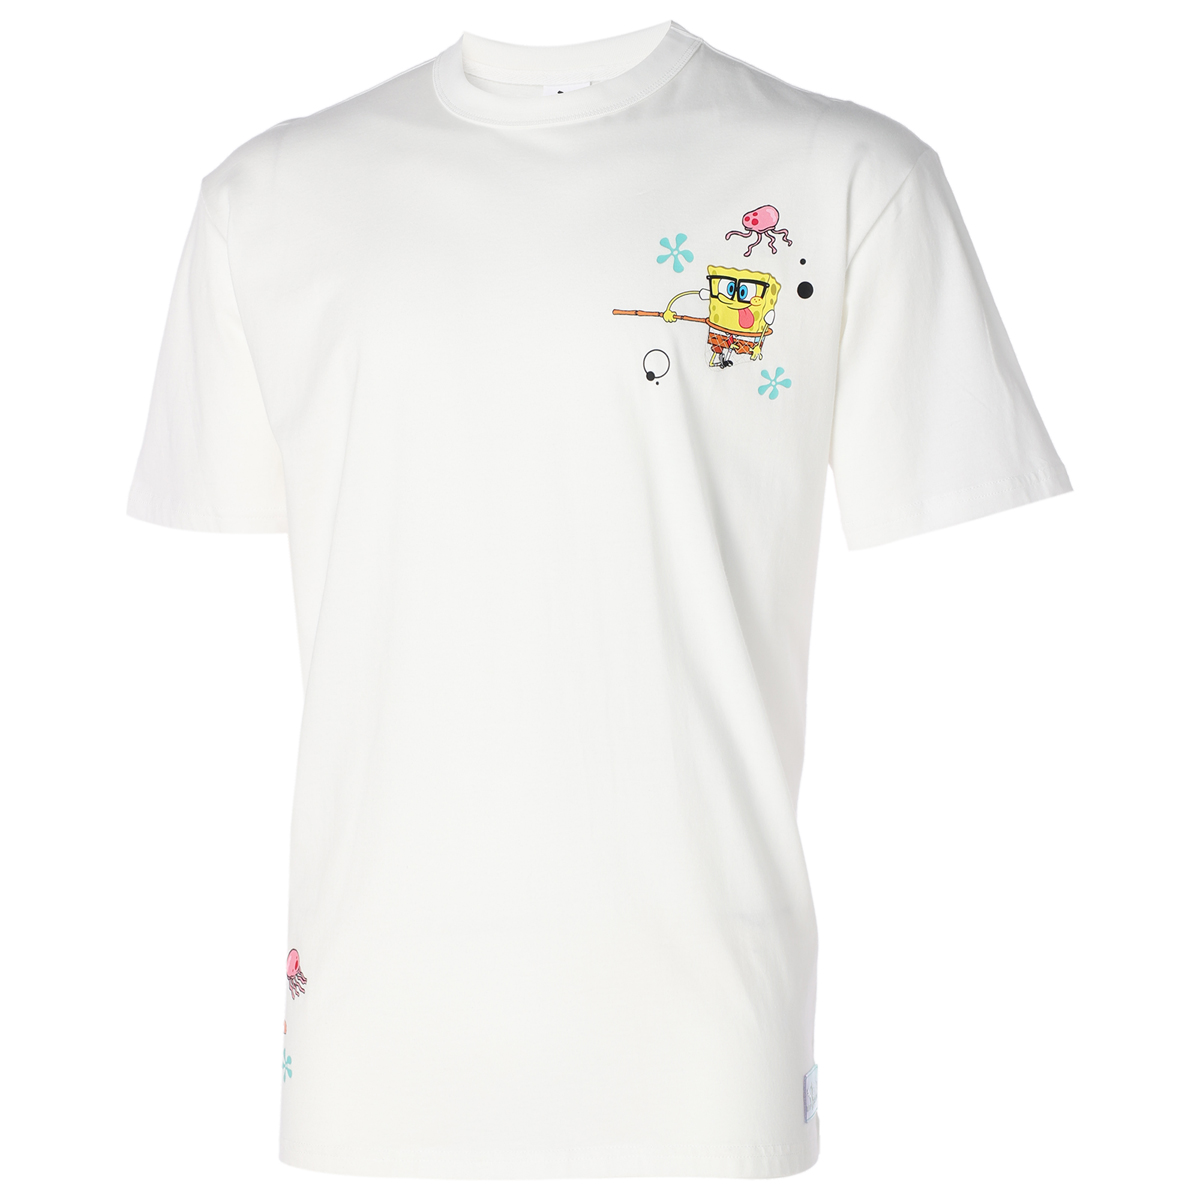 Puma-Spongebob-T-Shirt-White